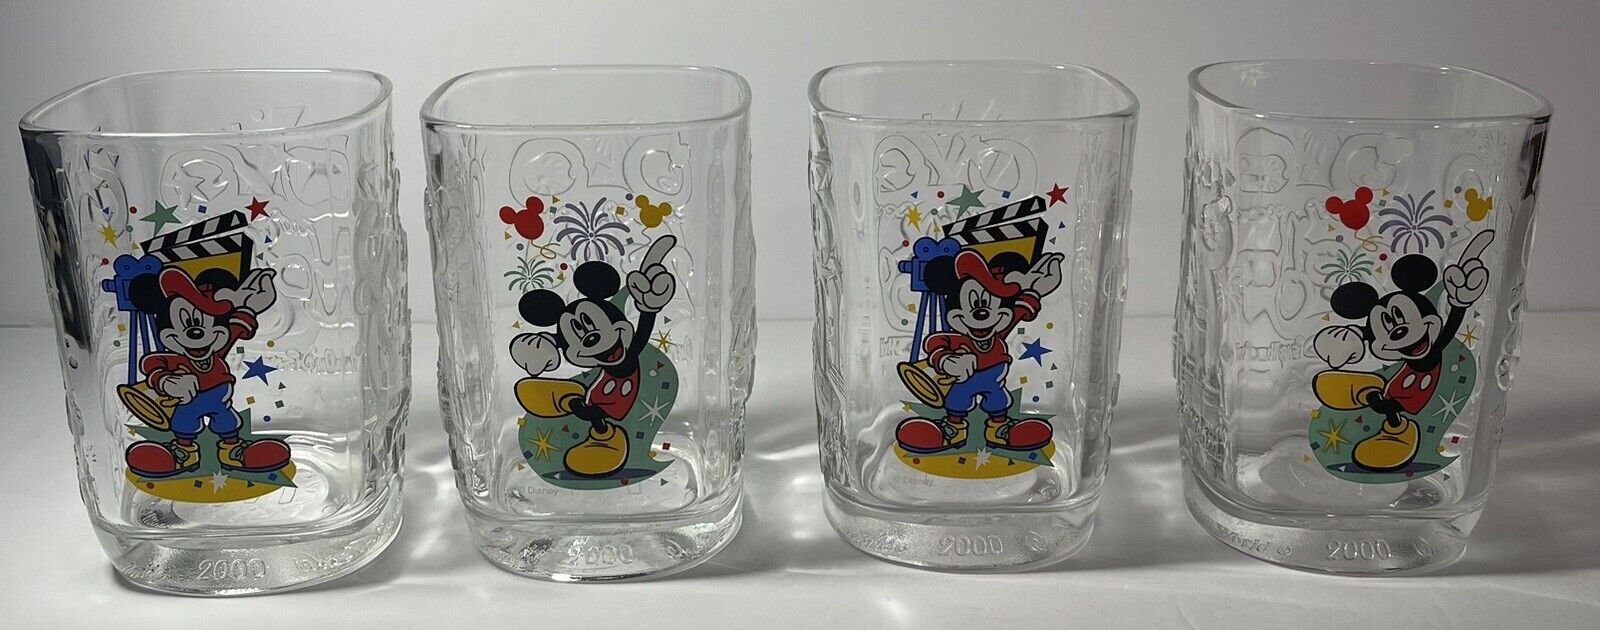 Vintage 2000 McDonalds Cups Walt Disney World Mickey Mouse Glasses Set of 4